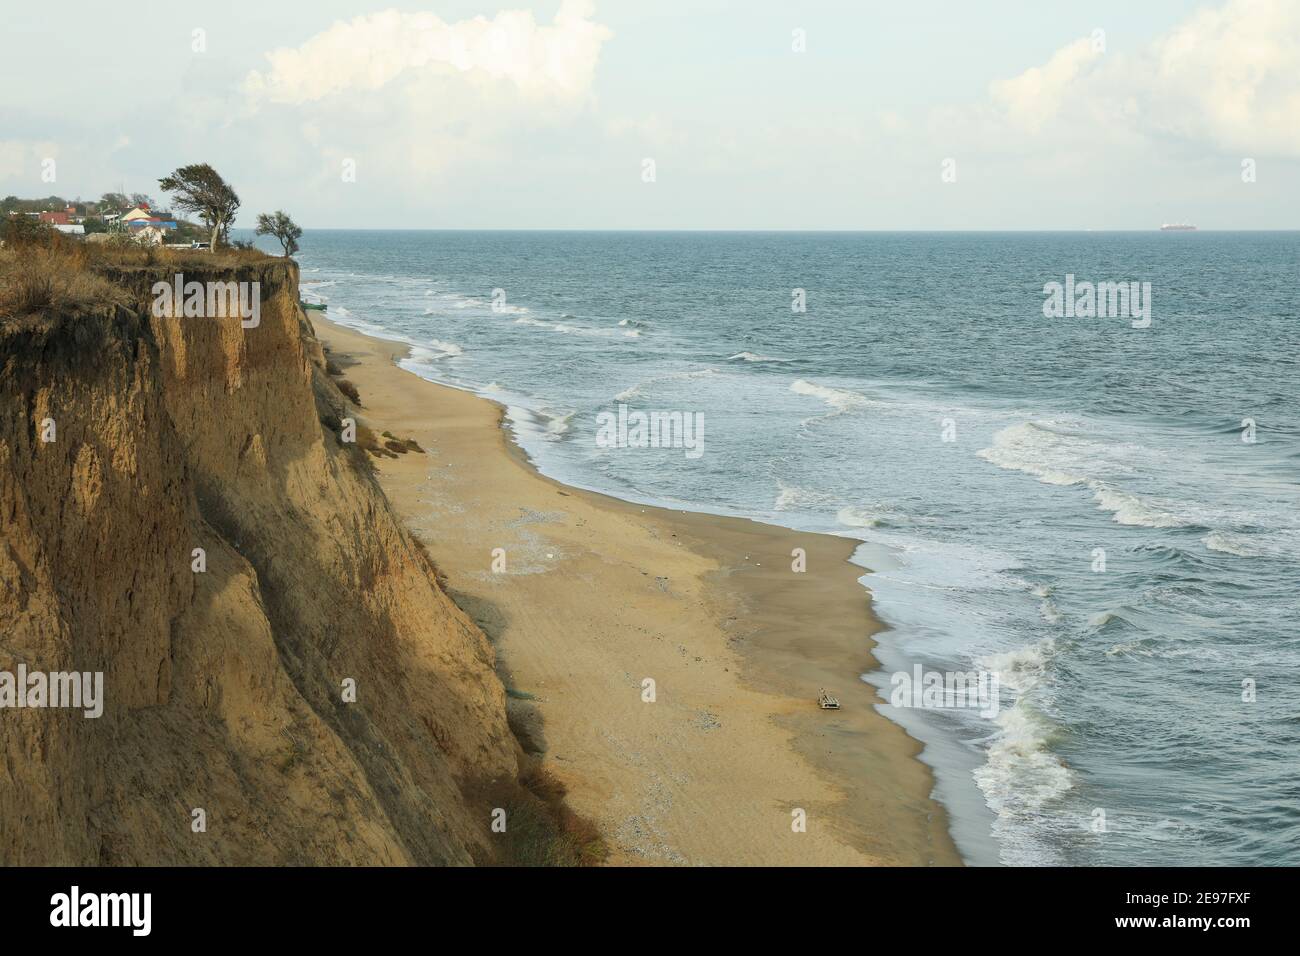 Sea with waves on beautiful sandy beach Stock Photo